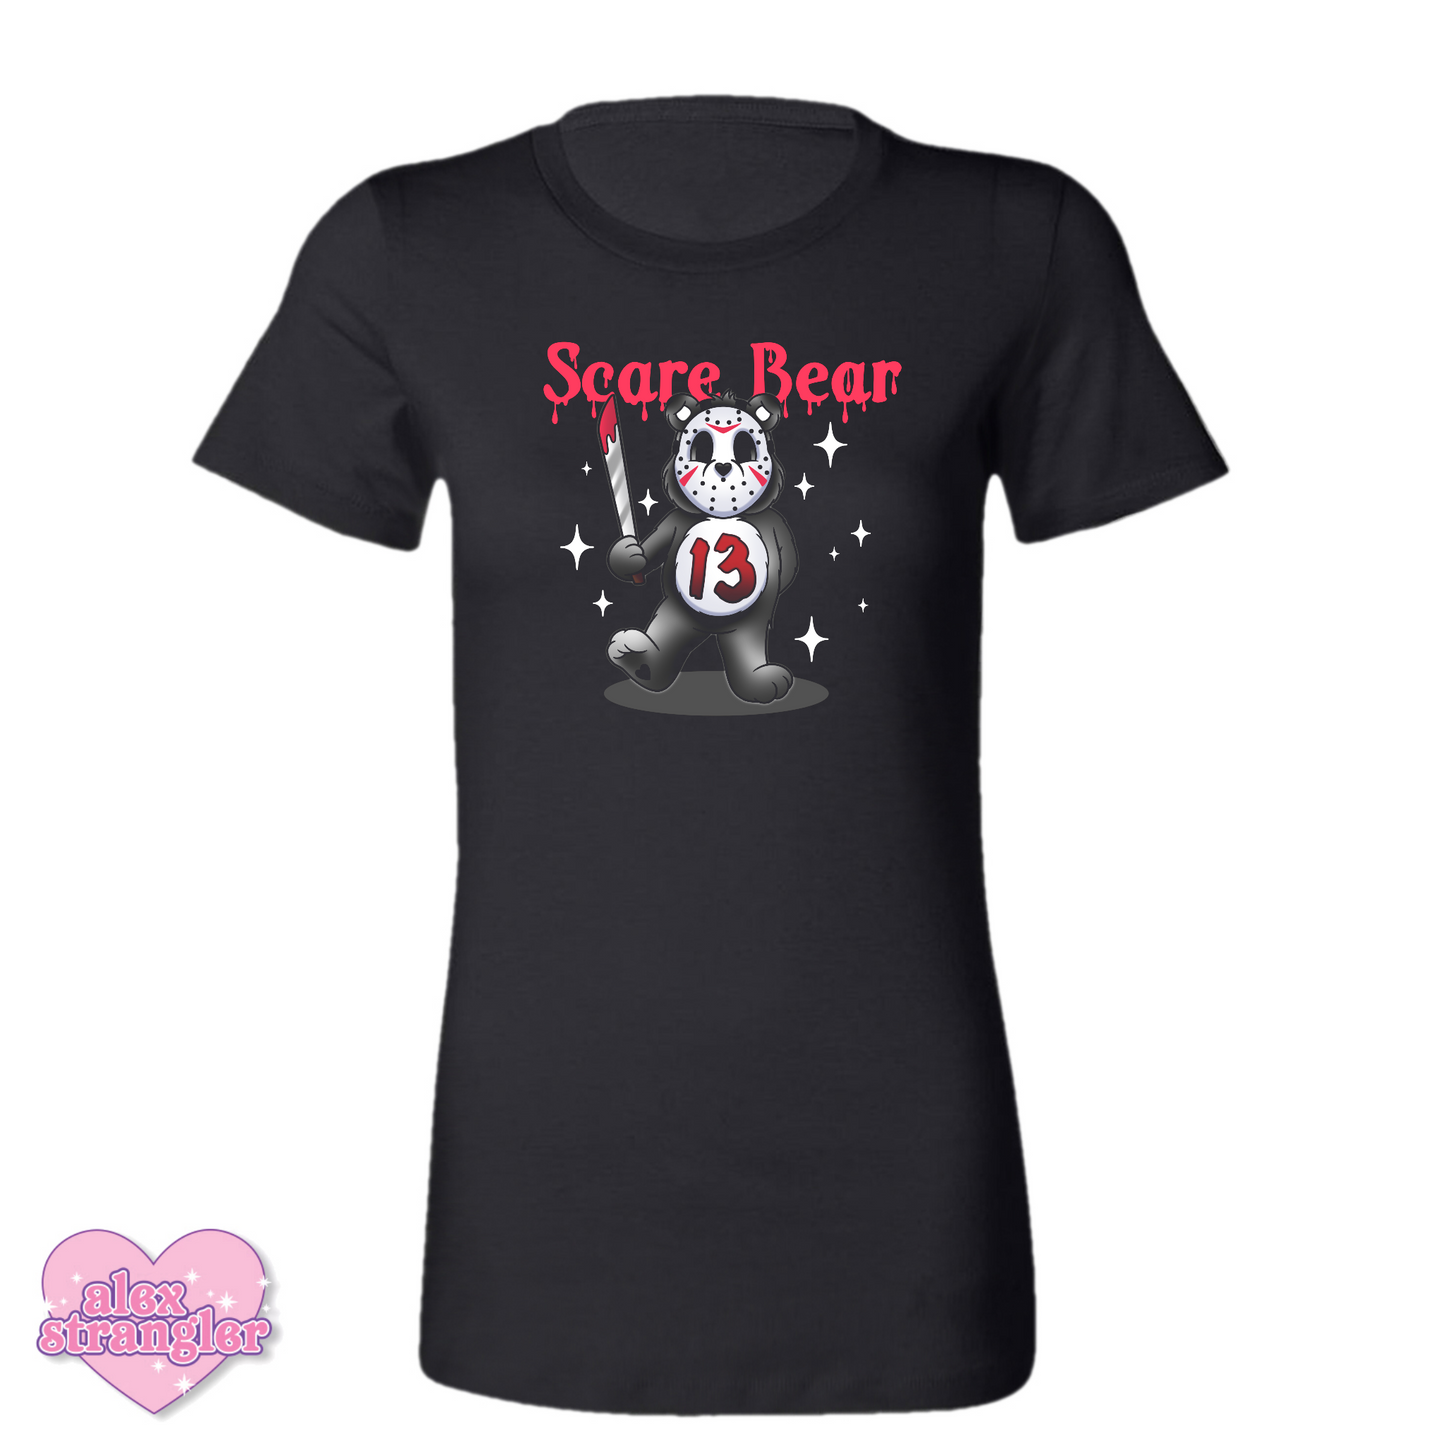 Scare Bear - Women's Tee